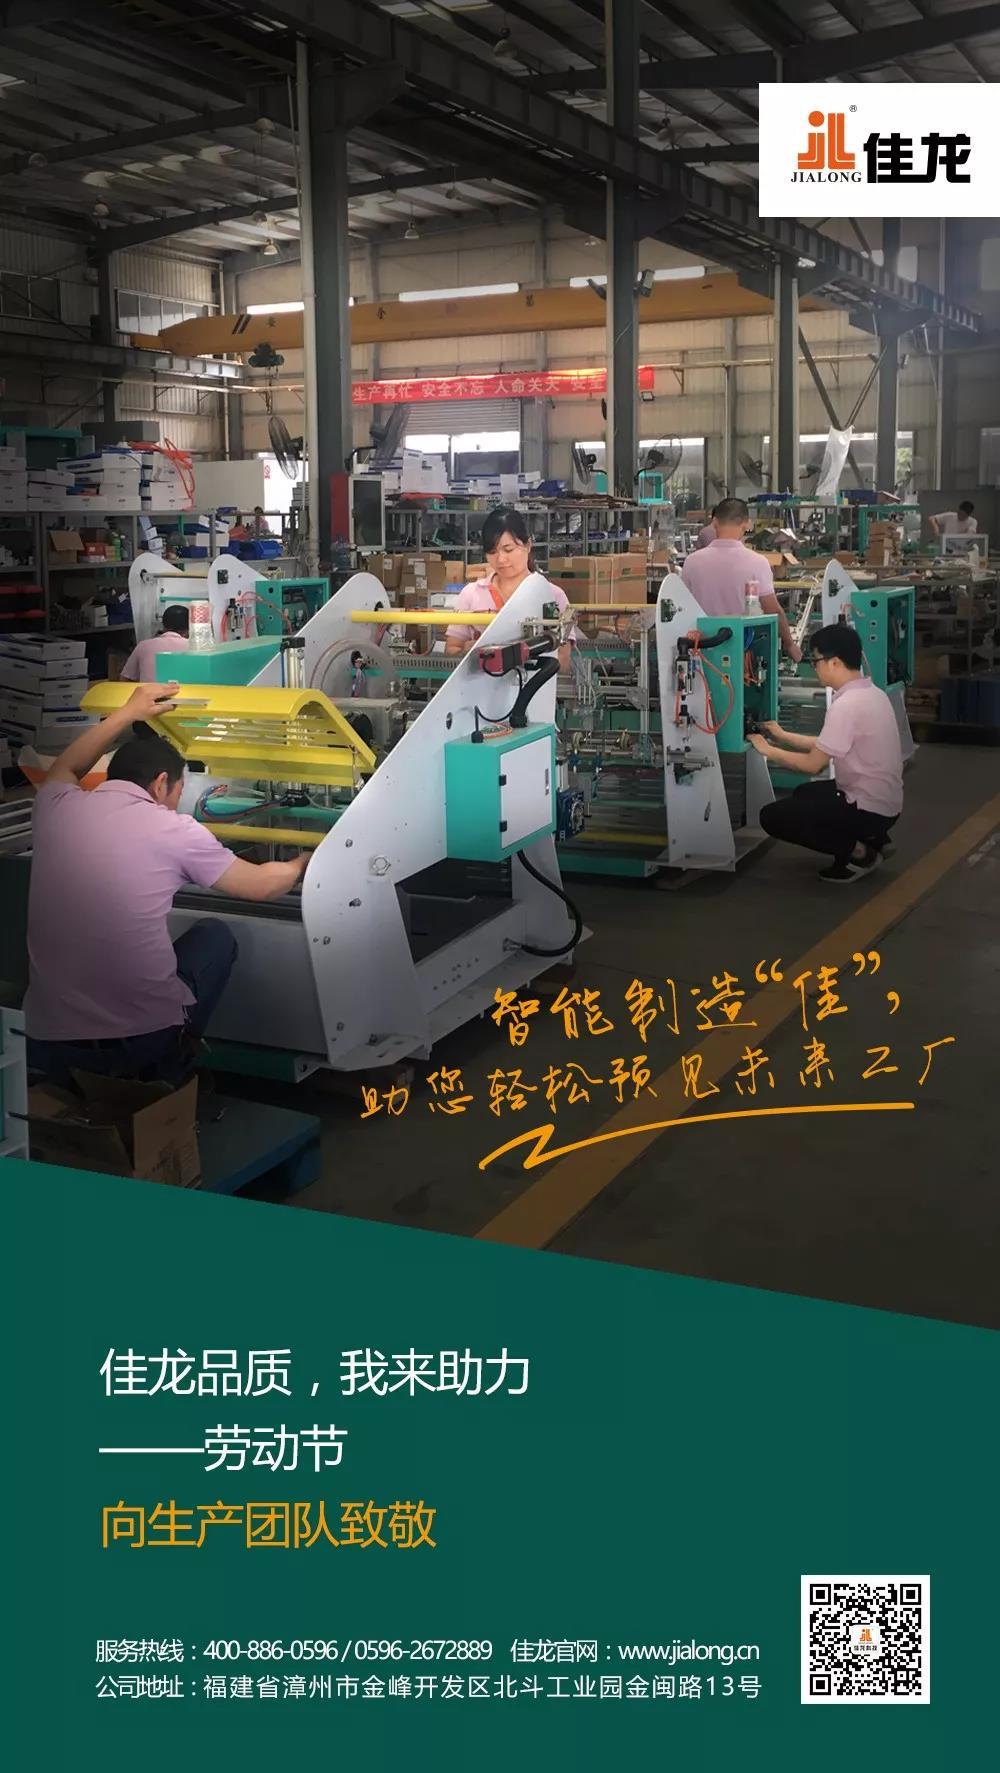 Zhangzhou Jialong Technology Department Wins The National Worker Pioneer Honor